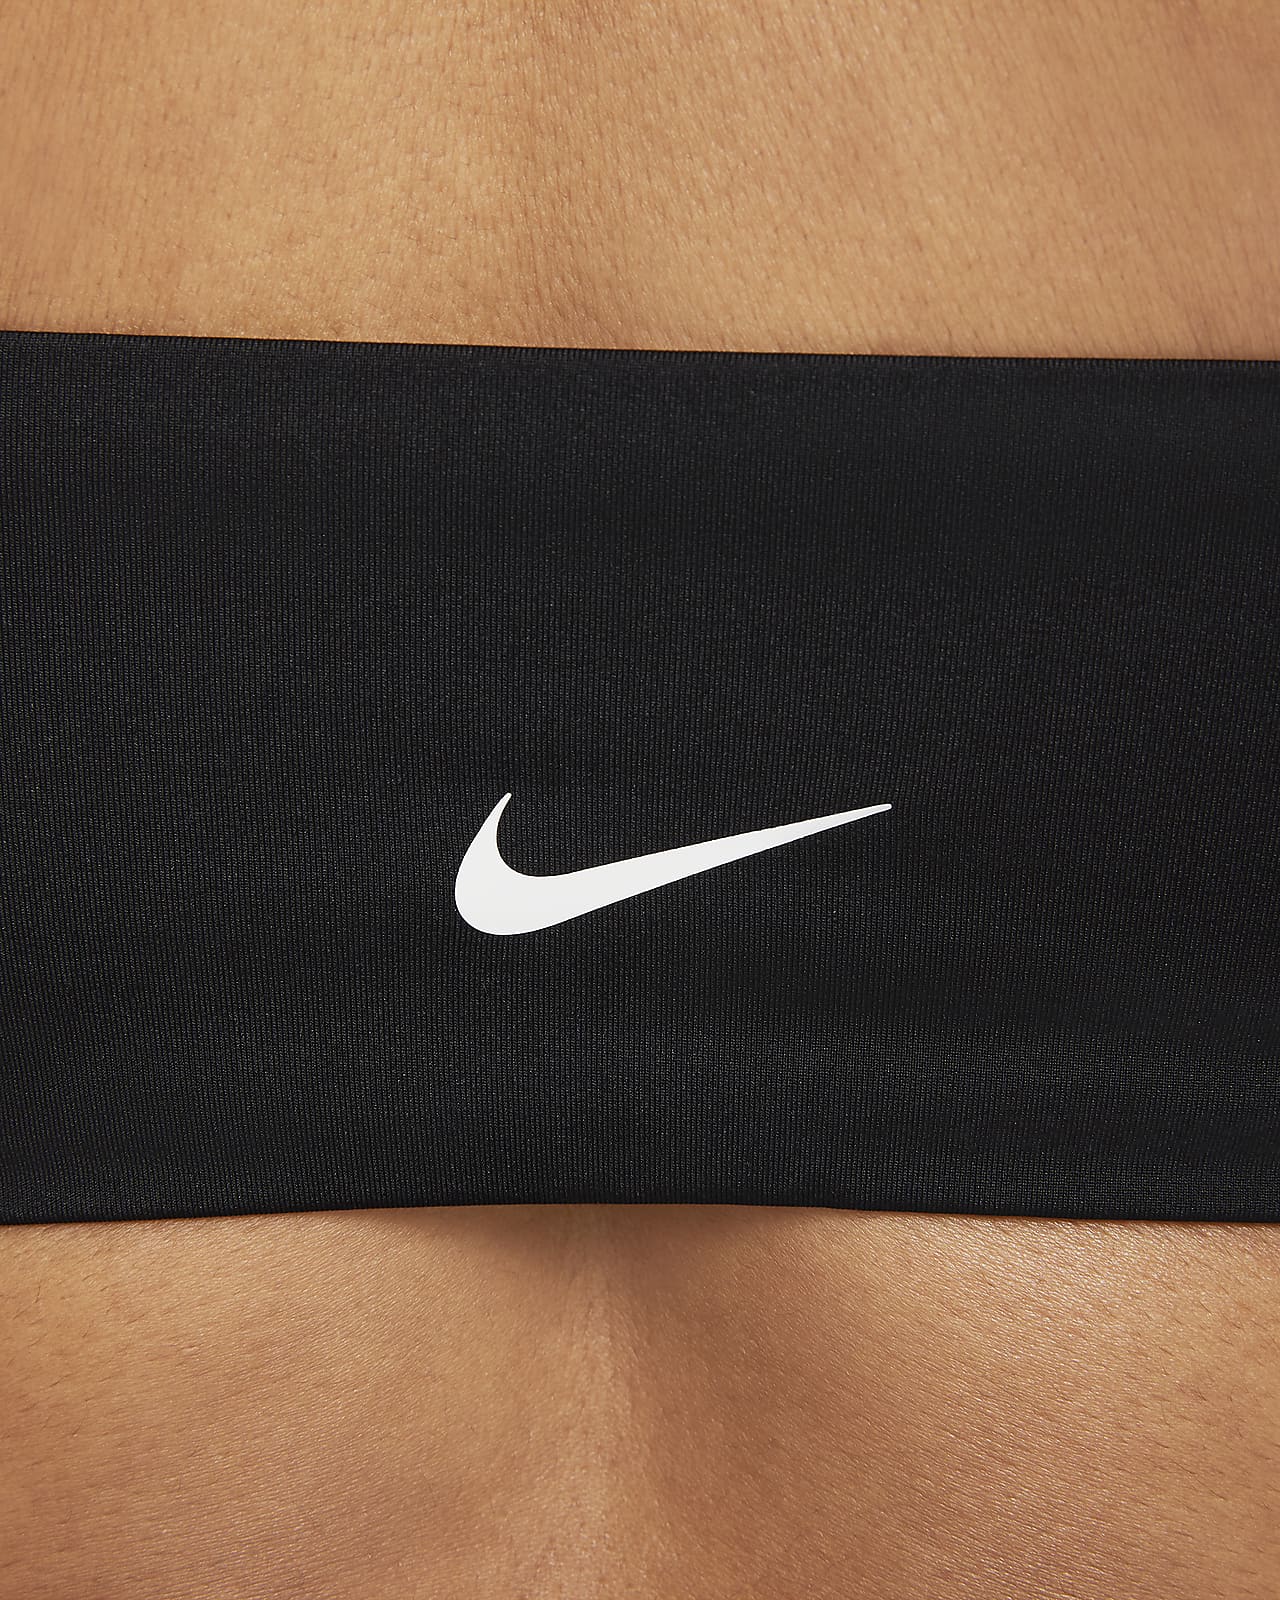 Bandeau Nike Yoga Headband Wide Noir